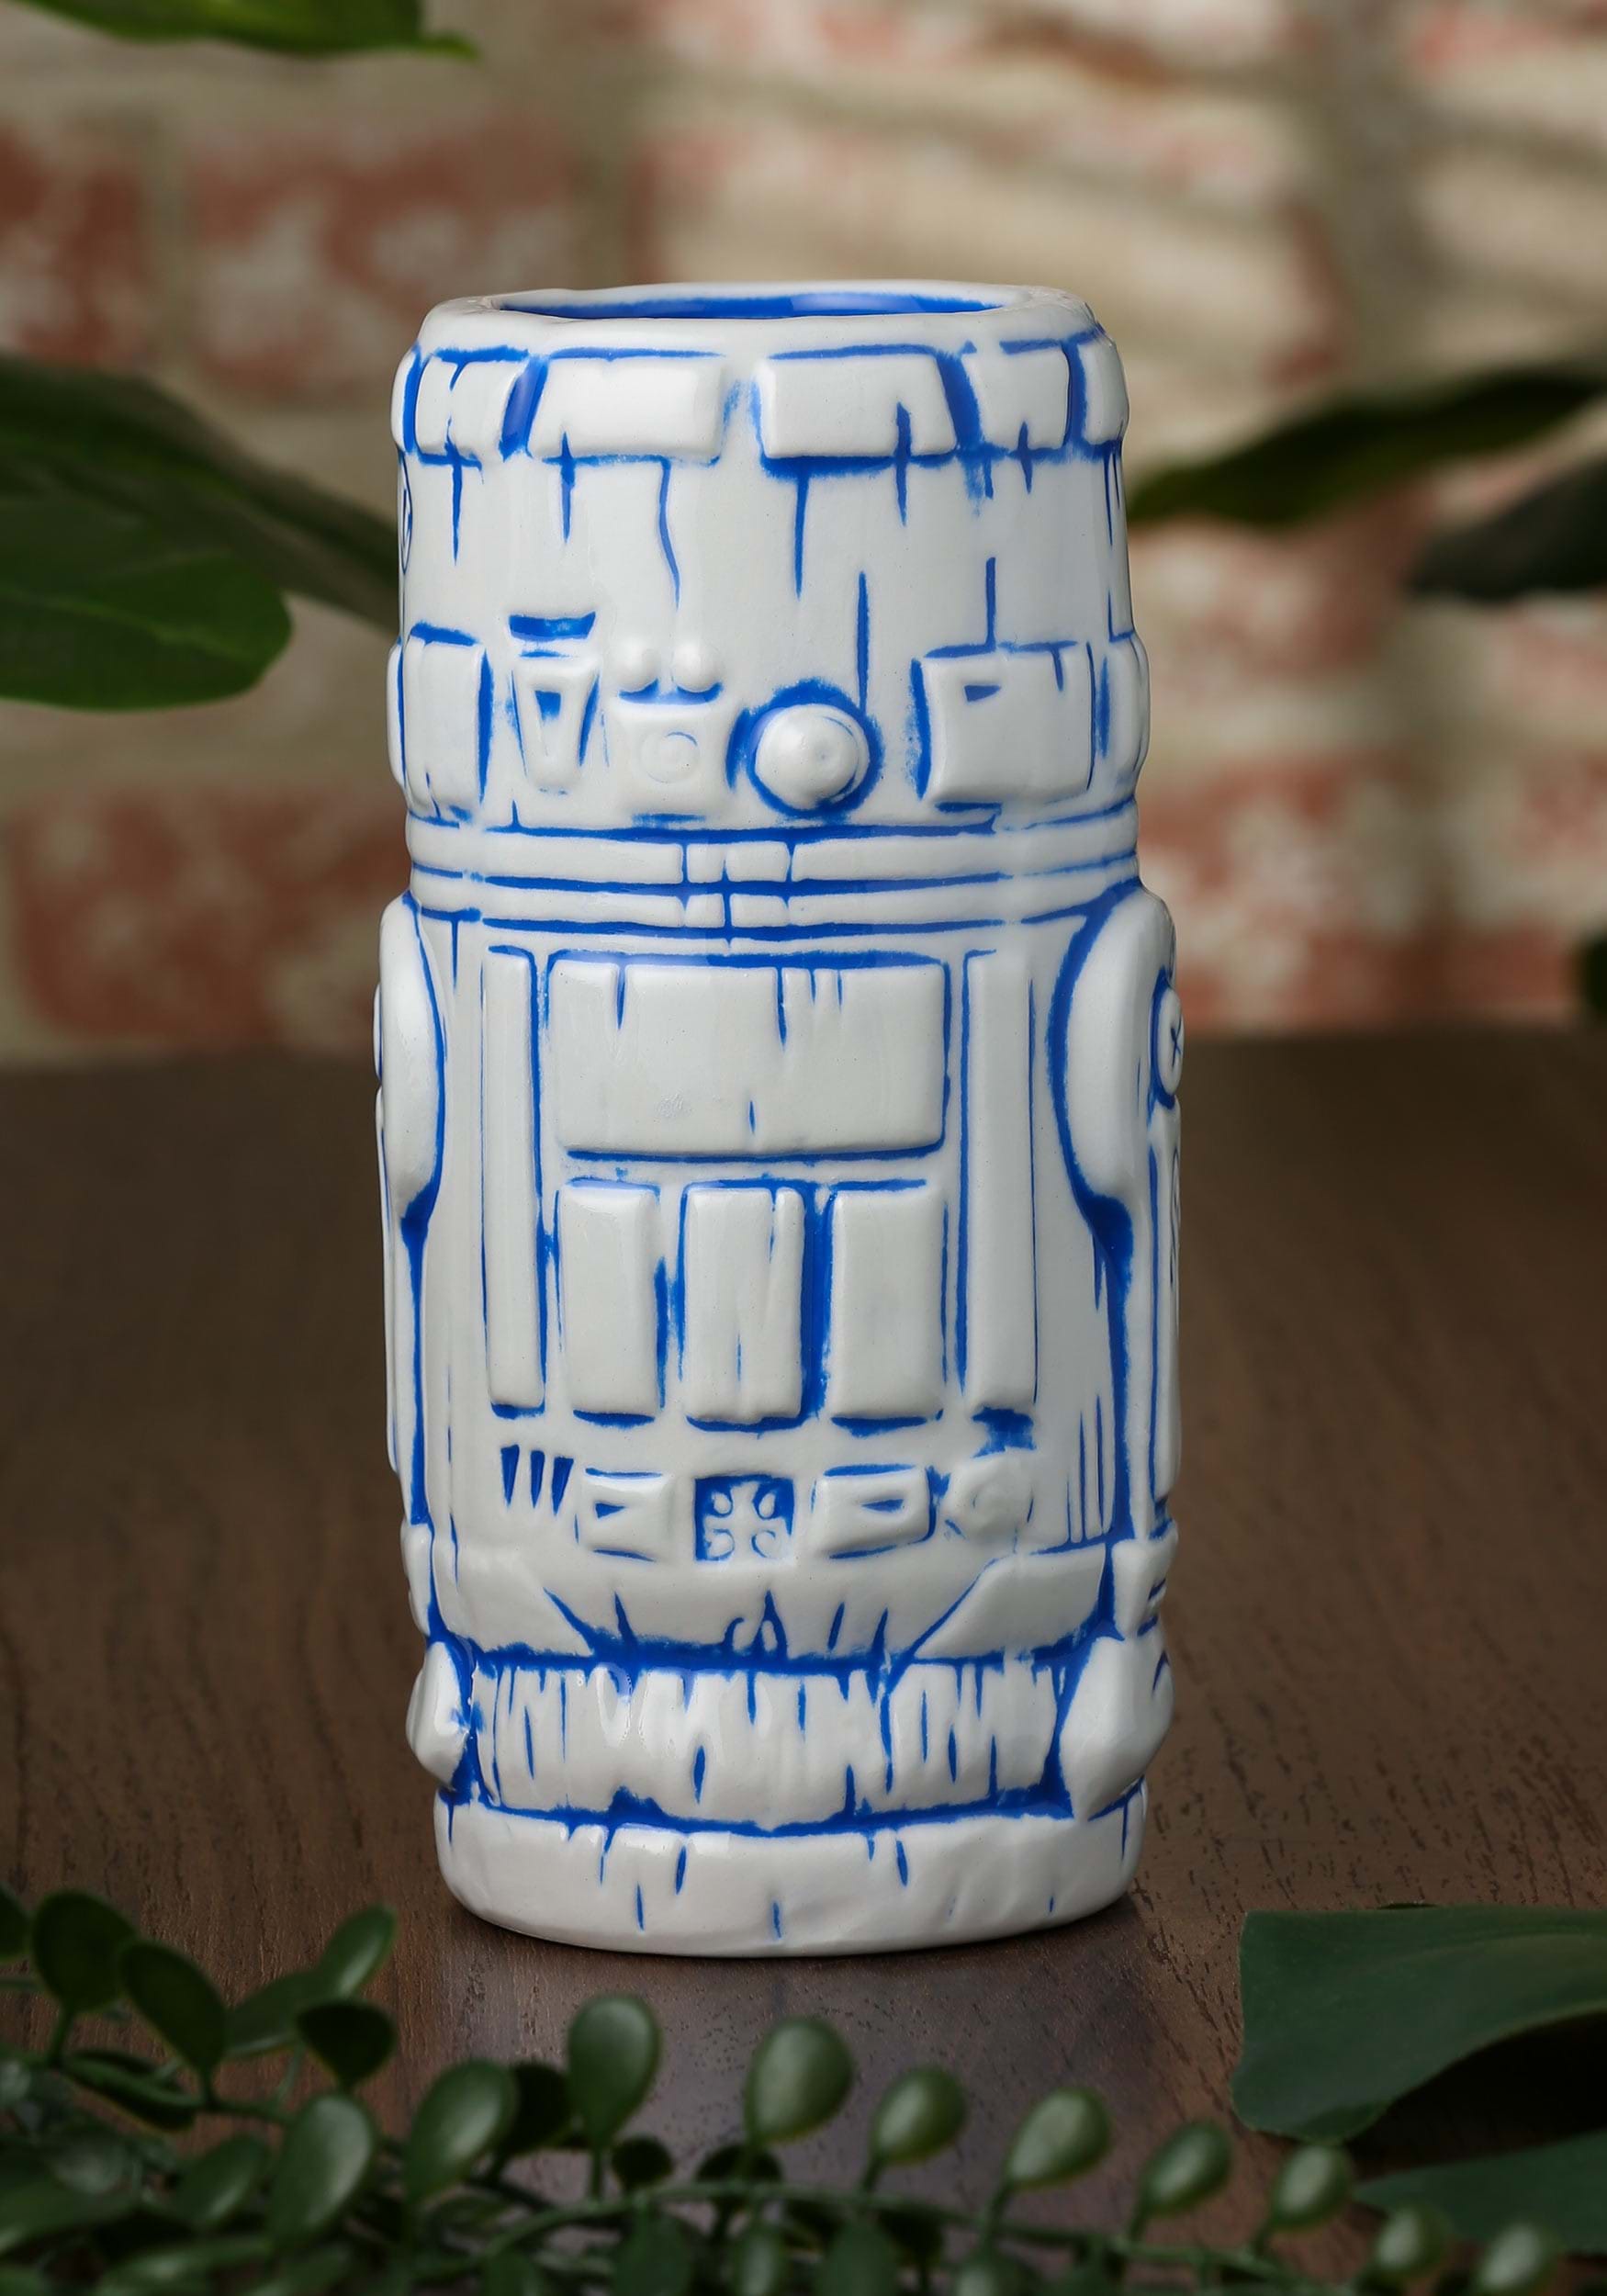 Geeki Tiki R2-D2 Star Wars Mug